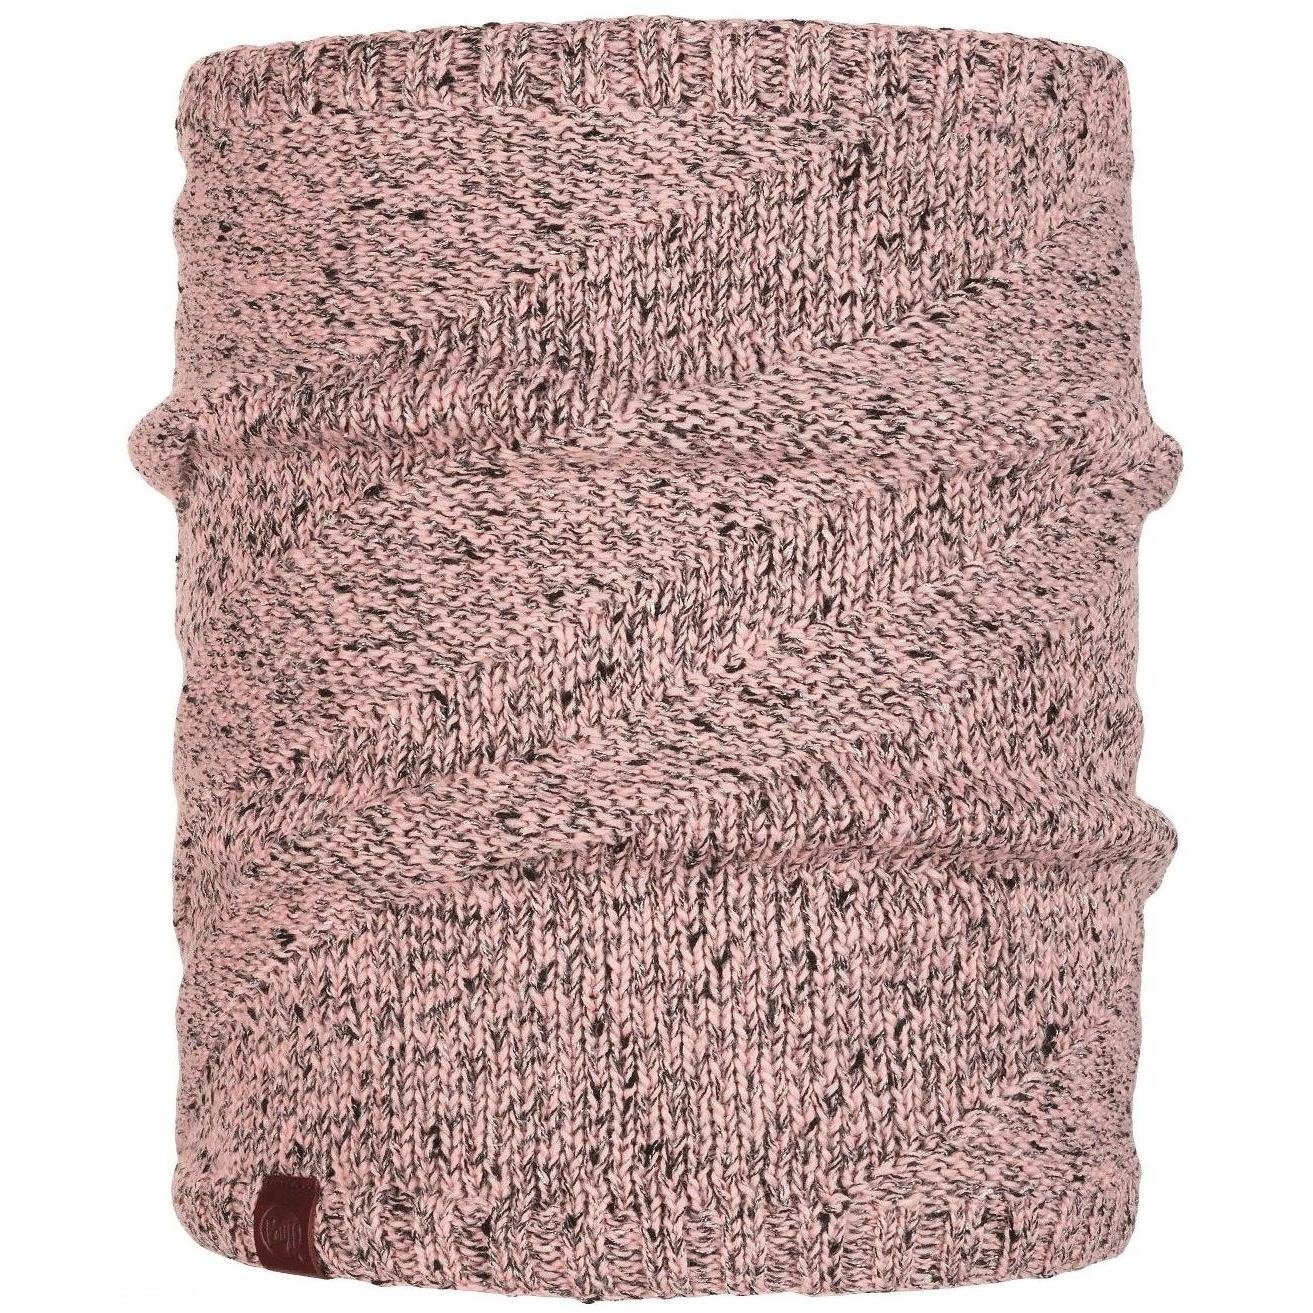 Шарф Buff Knitted & Fleece Neckwarmer Lan Lan Pale Pink, US:one size, 126472.508.10.00 шарф buff knitted neckwarmer comfort norval honey us one size 124244 120 10 00